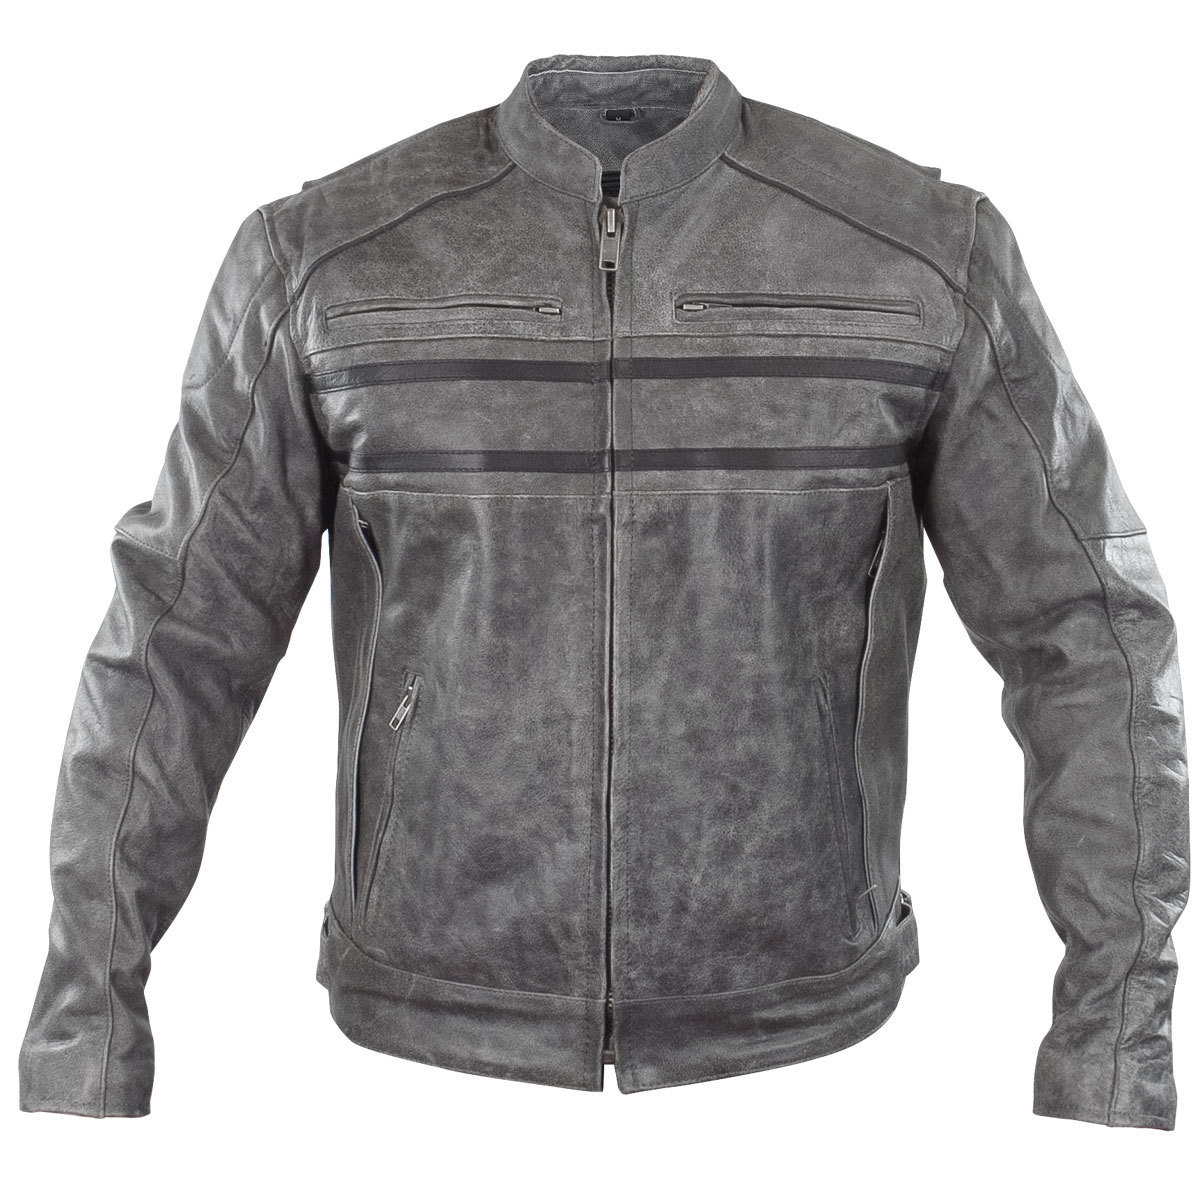 New Handmade Men's Gray Leather Biker/Racer Jacket 2019